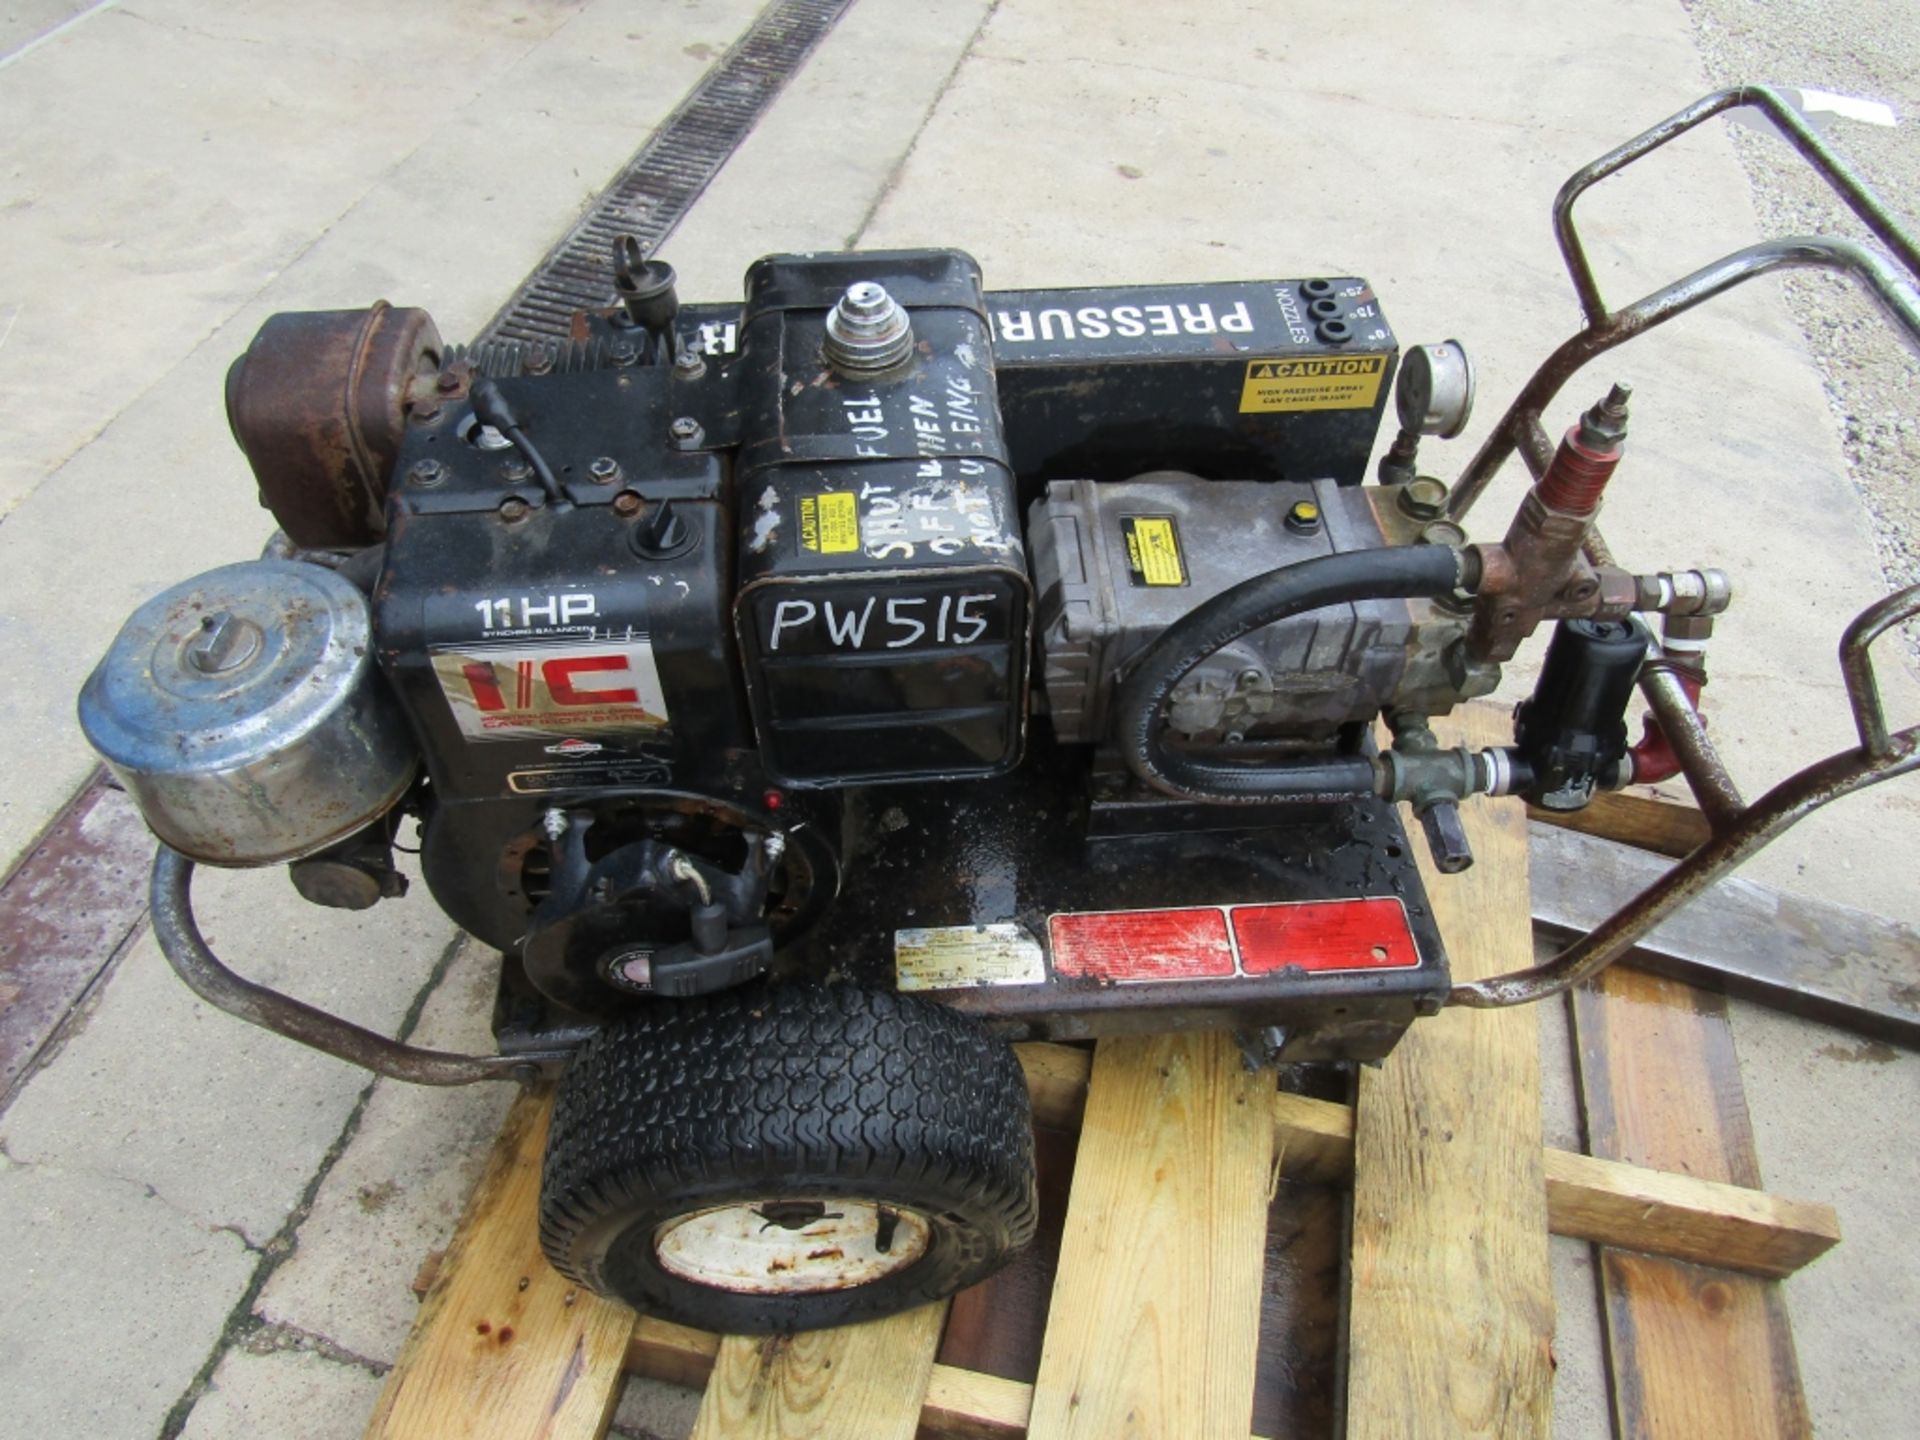 Mi-T-M Pressure Washer 2405, Model 2405, 11 hp Motor - Image 2 of 2